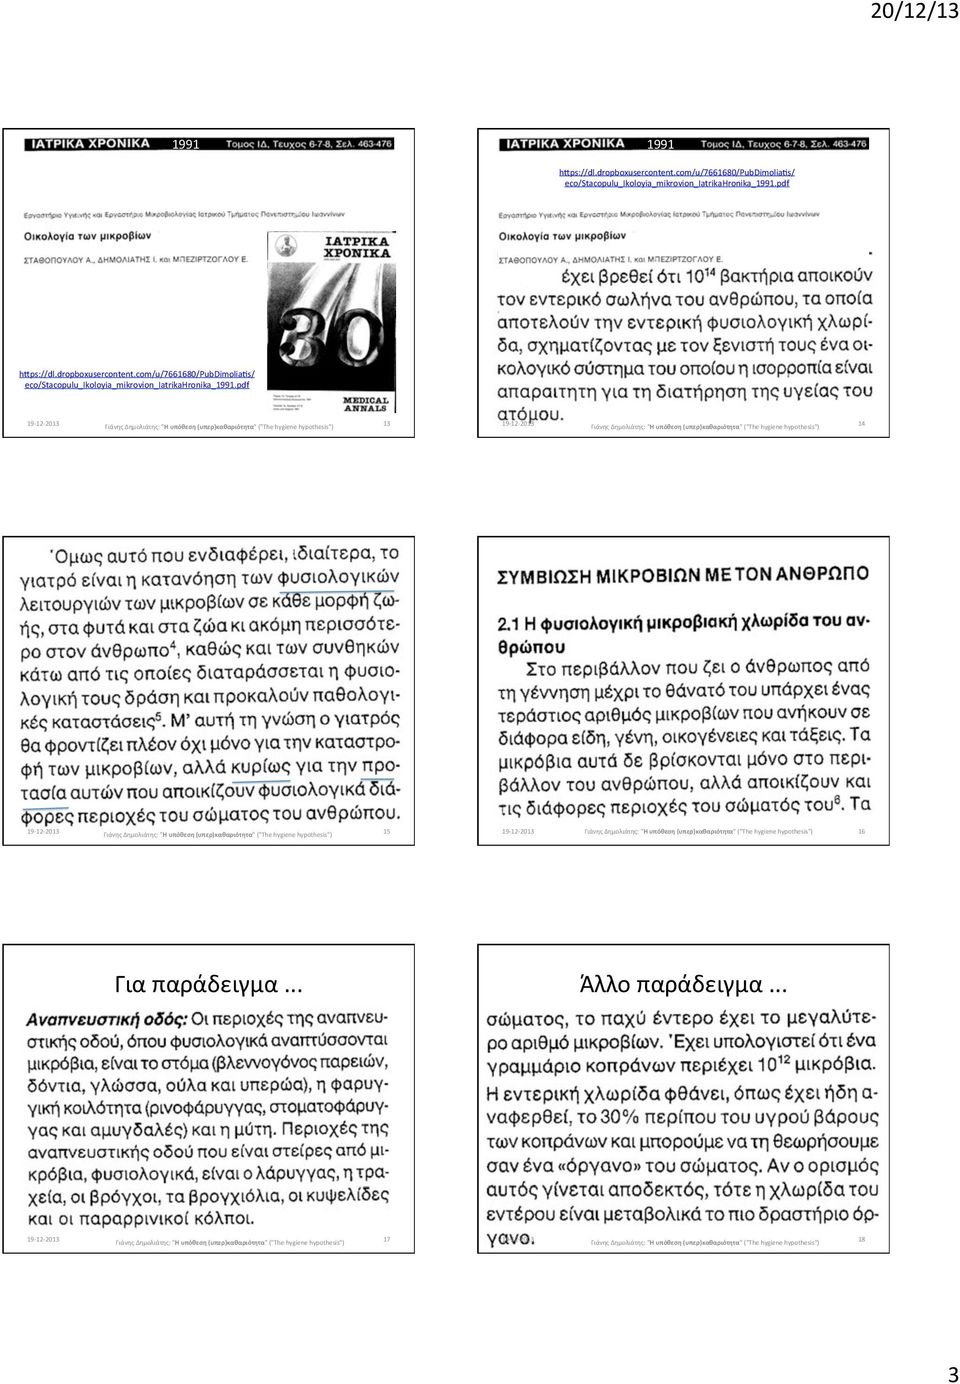 eco/stacopulu_ikoloyia_mikrovion_iatrikahronika_1991.pdf hbps://dl.